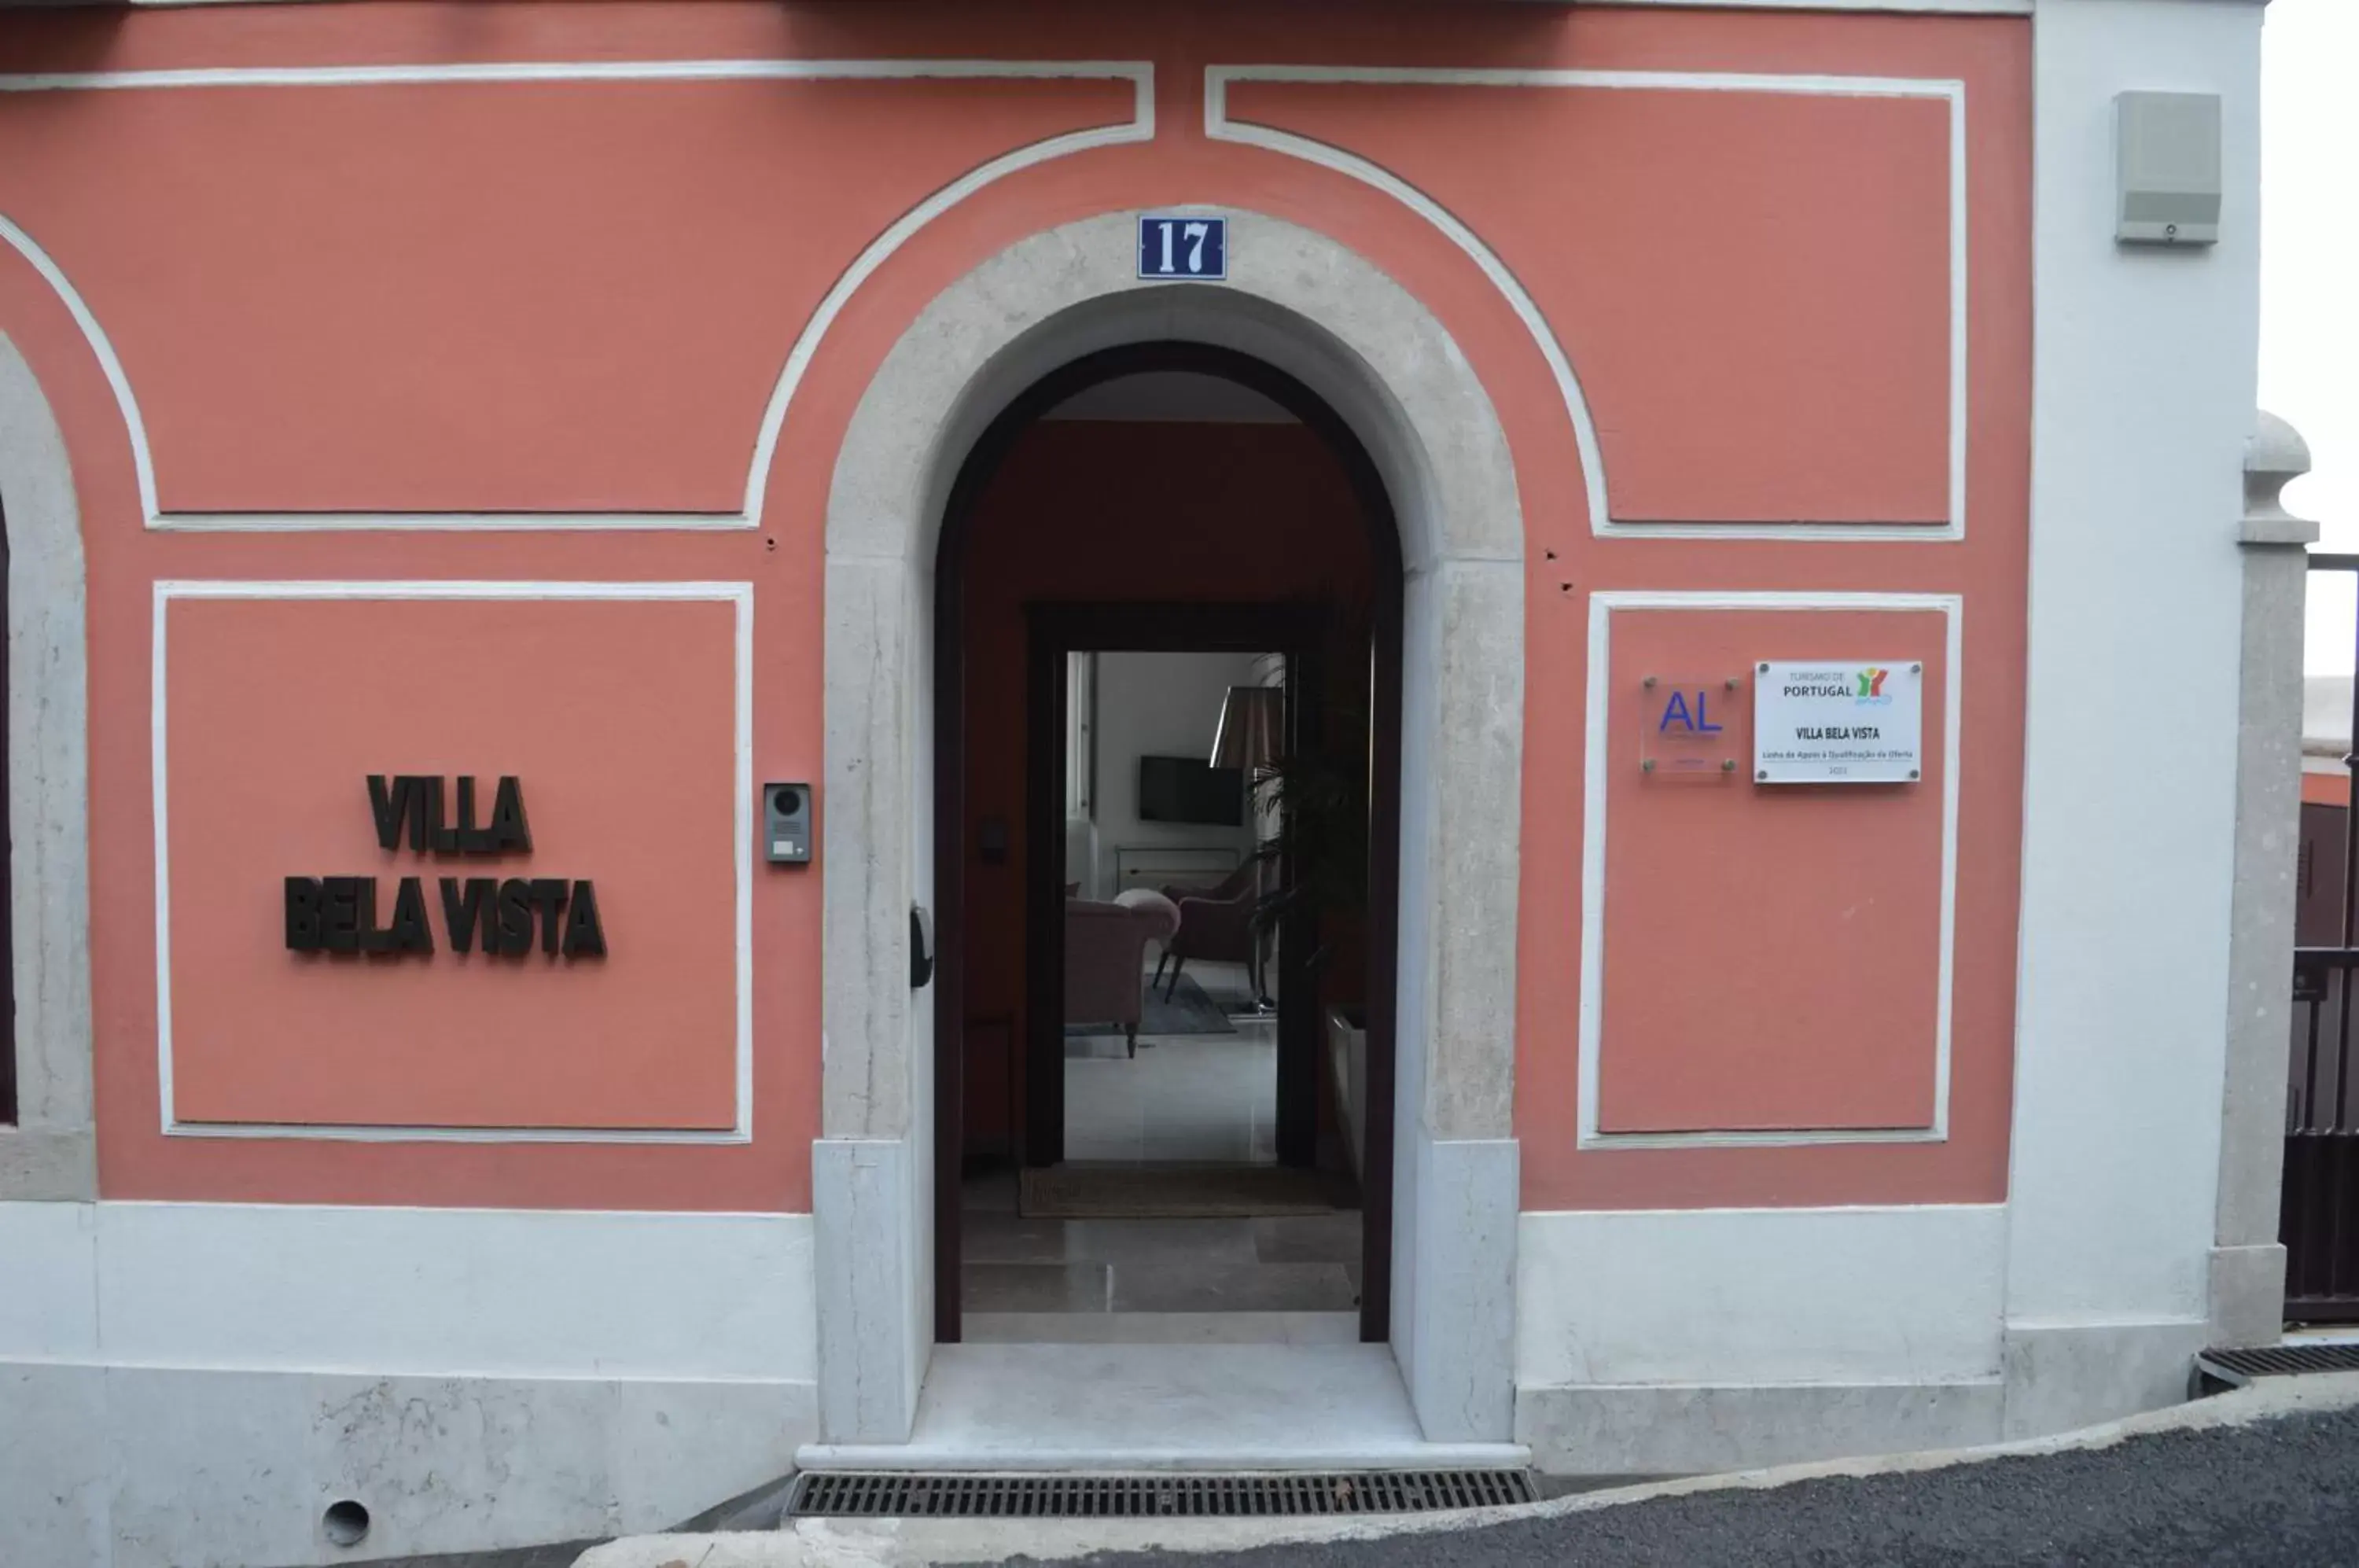 Facade/entrance in Villa Bela Vista